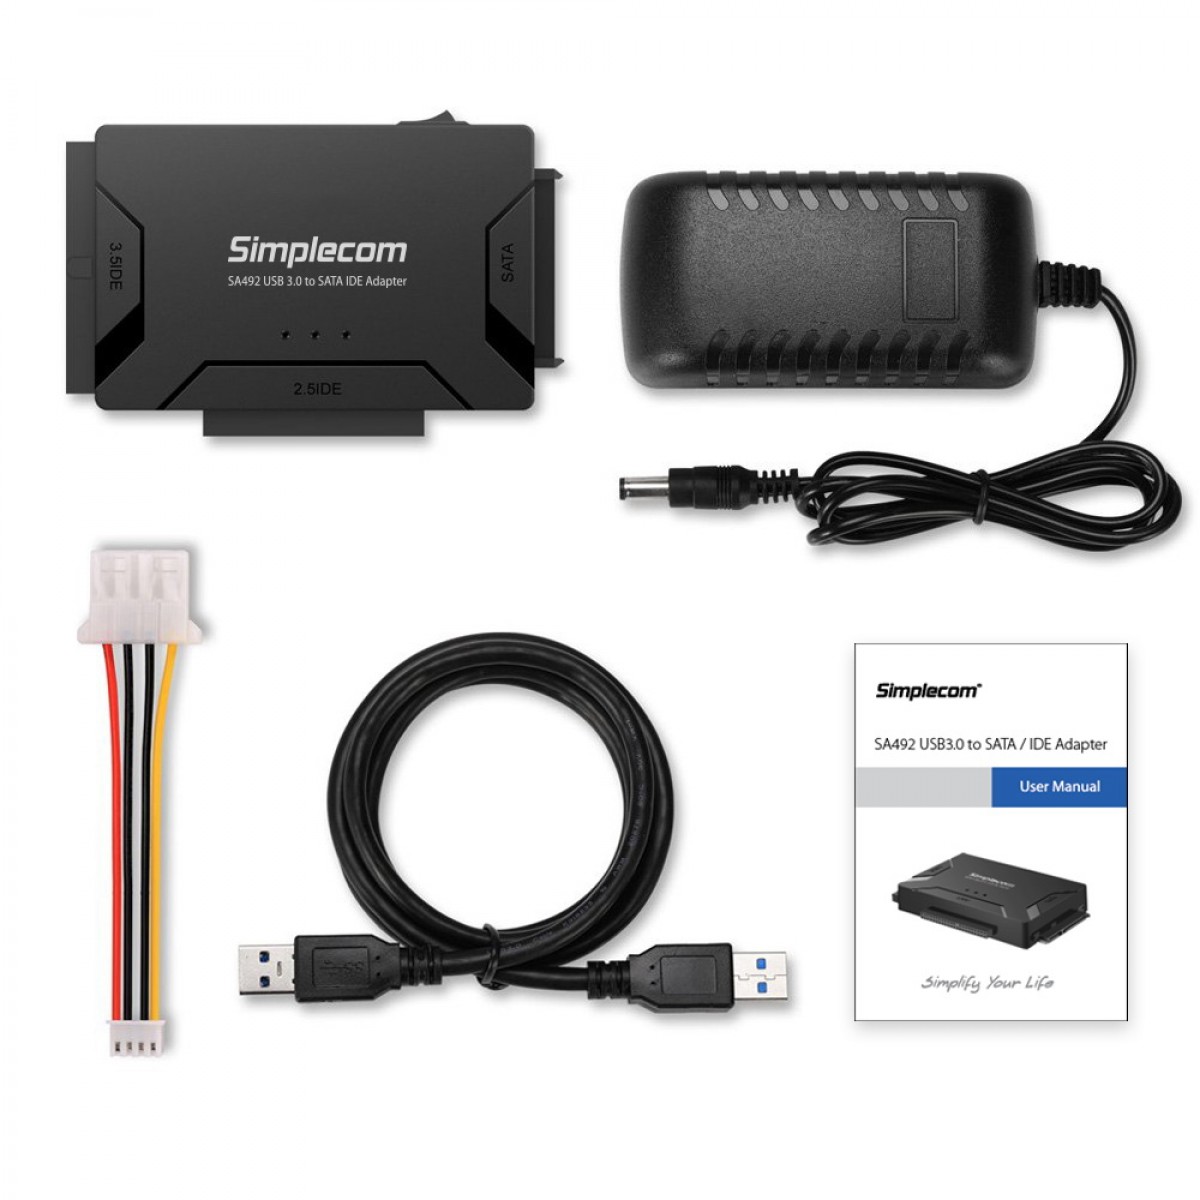 Simplecom SA492 USB to 2.5", SATA IDE Adapter with Power Supply